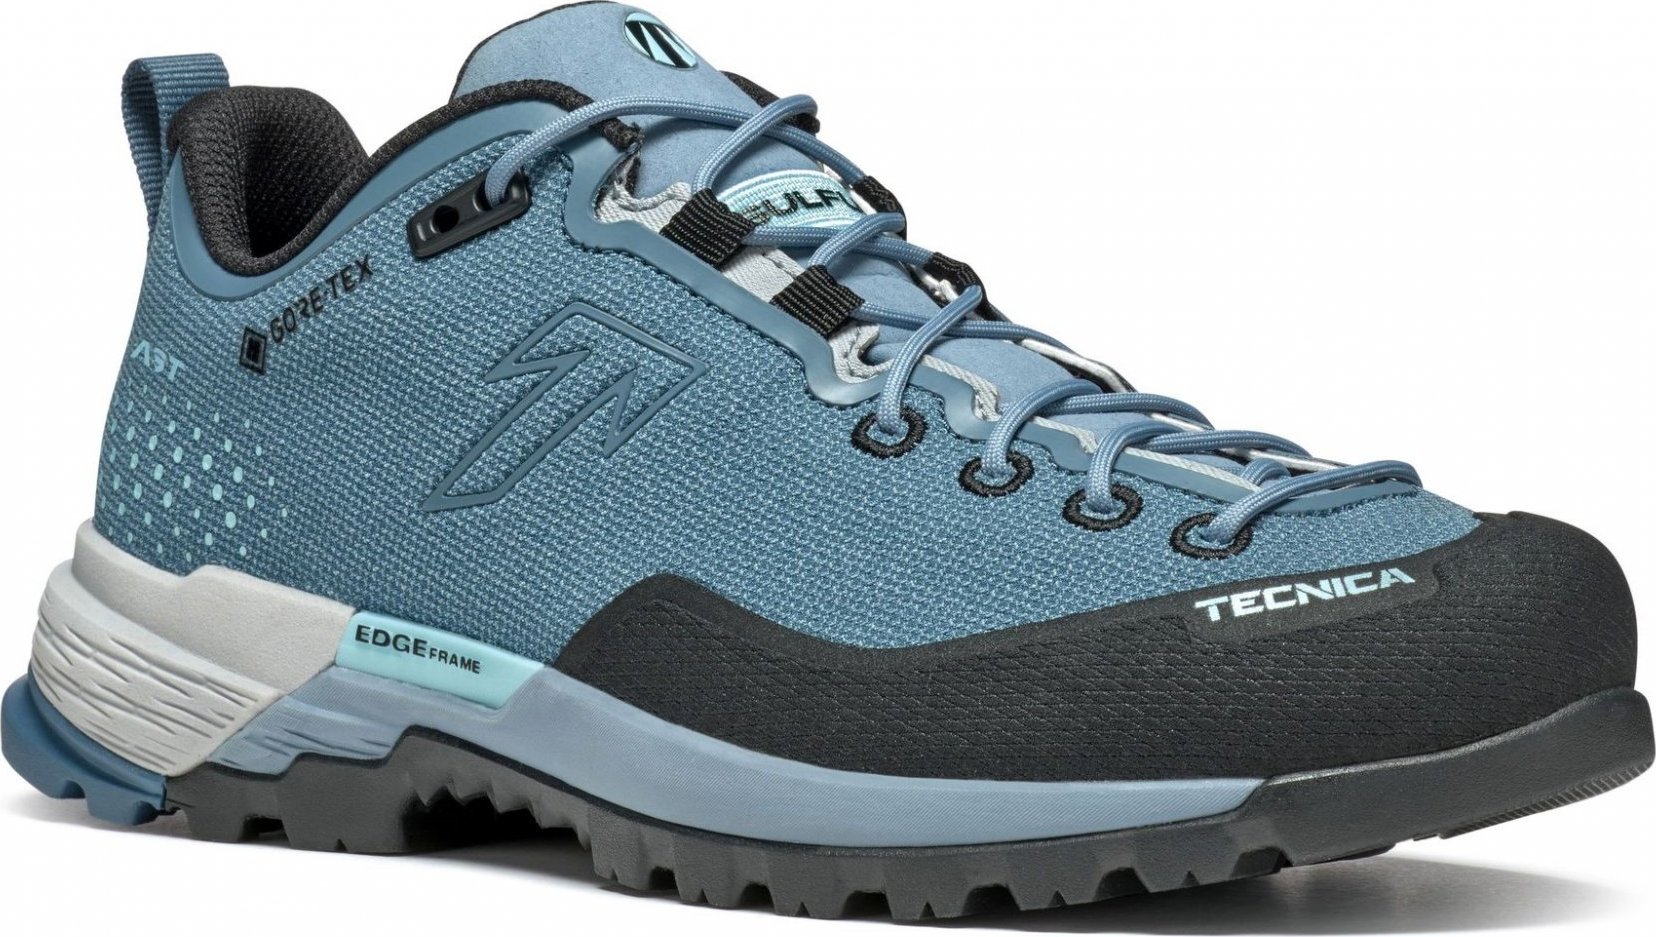 Dámské trekové boty TECNICA Sulfur S GTX Ws, 001 progressive blue/soft grey Velikost: 38